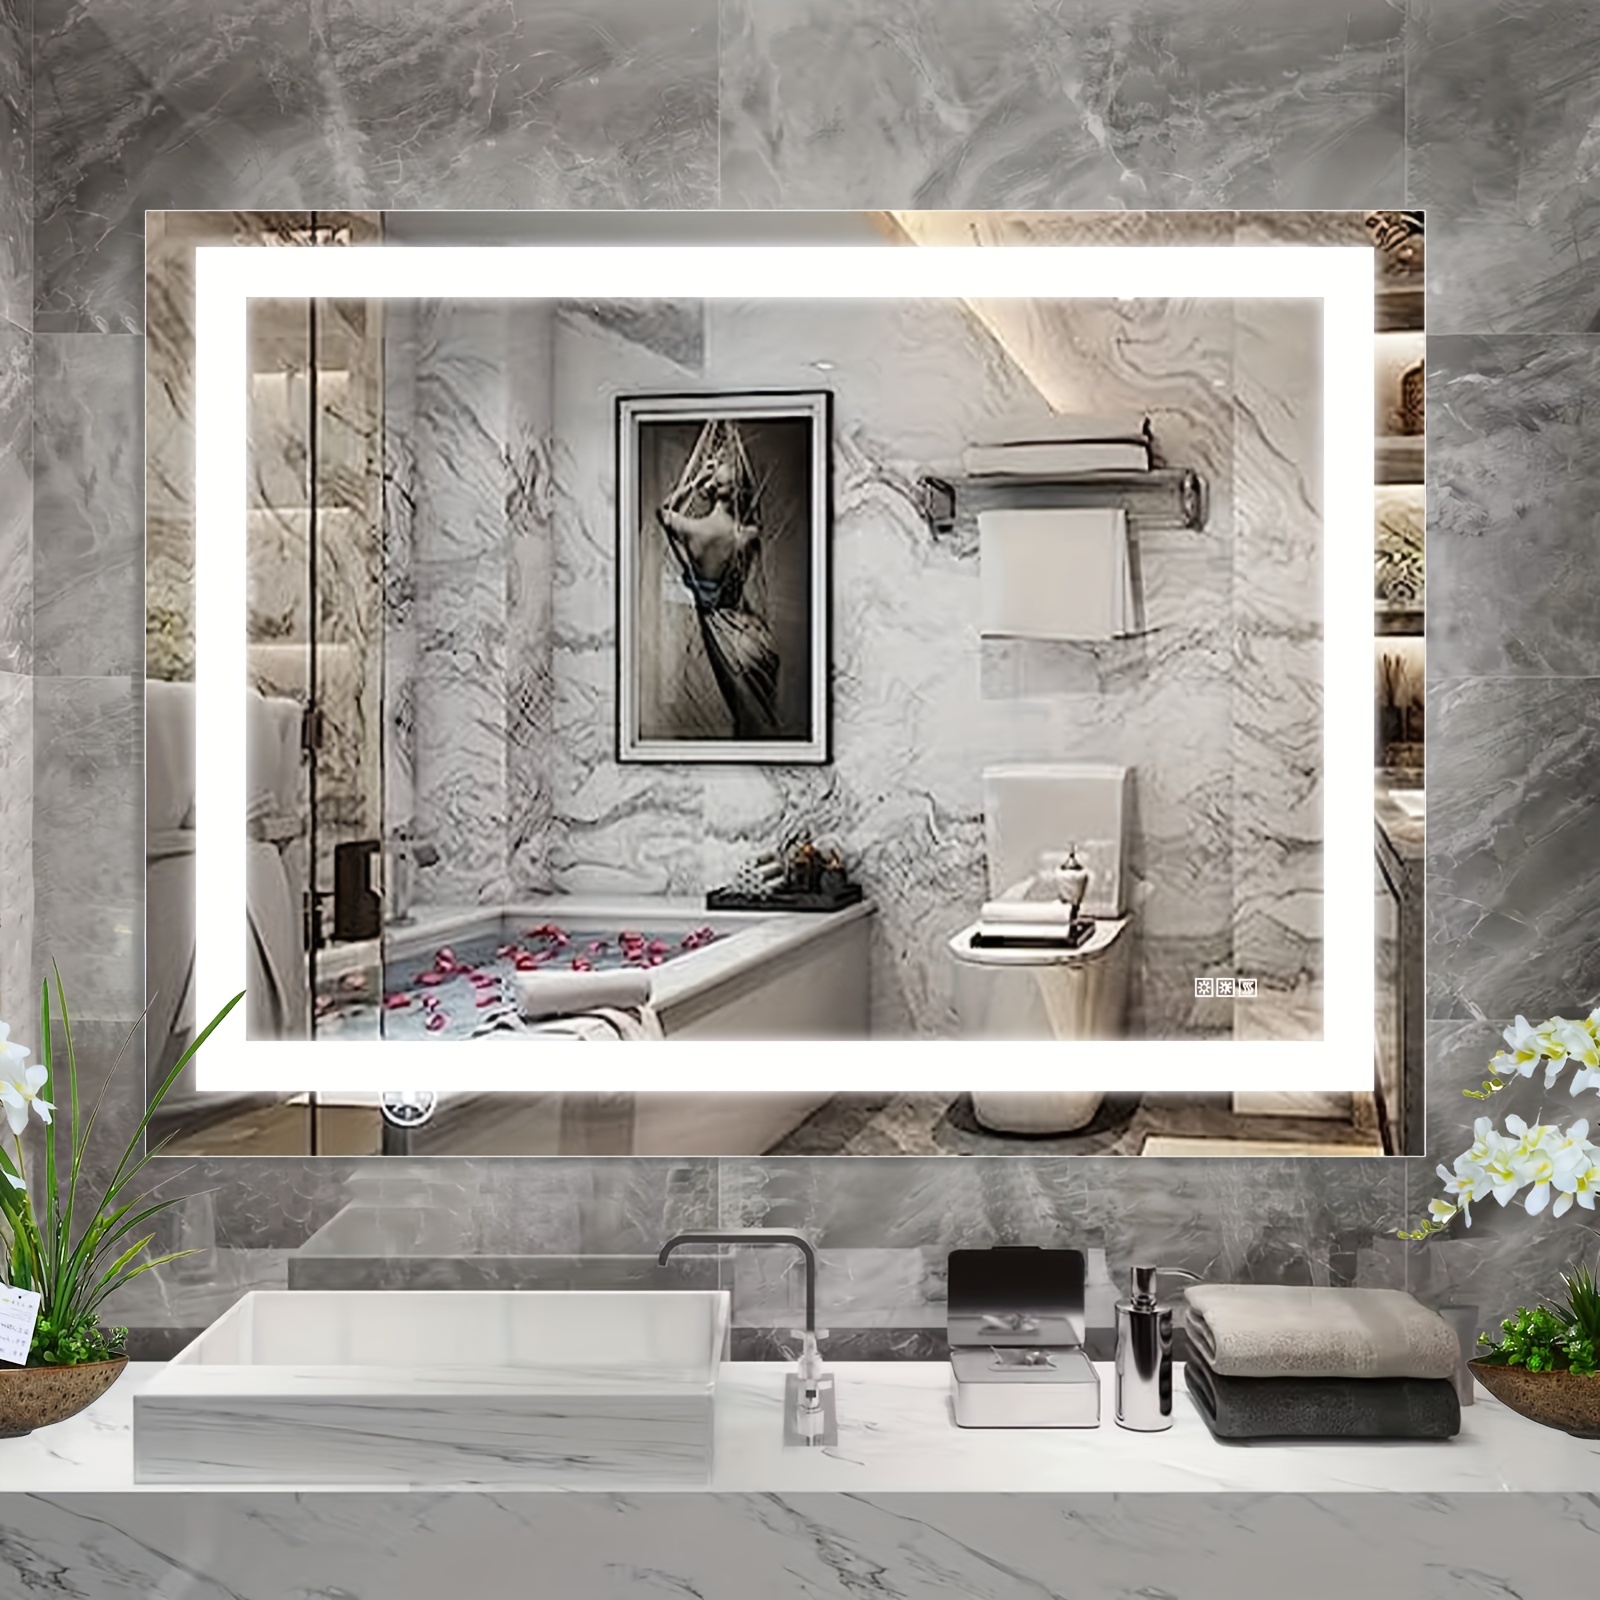 

Led Bathroom Mirror 48x 36 Inch With Lights, Anti-fog & Dimming Led Bathroom Vanity Mirror